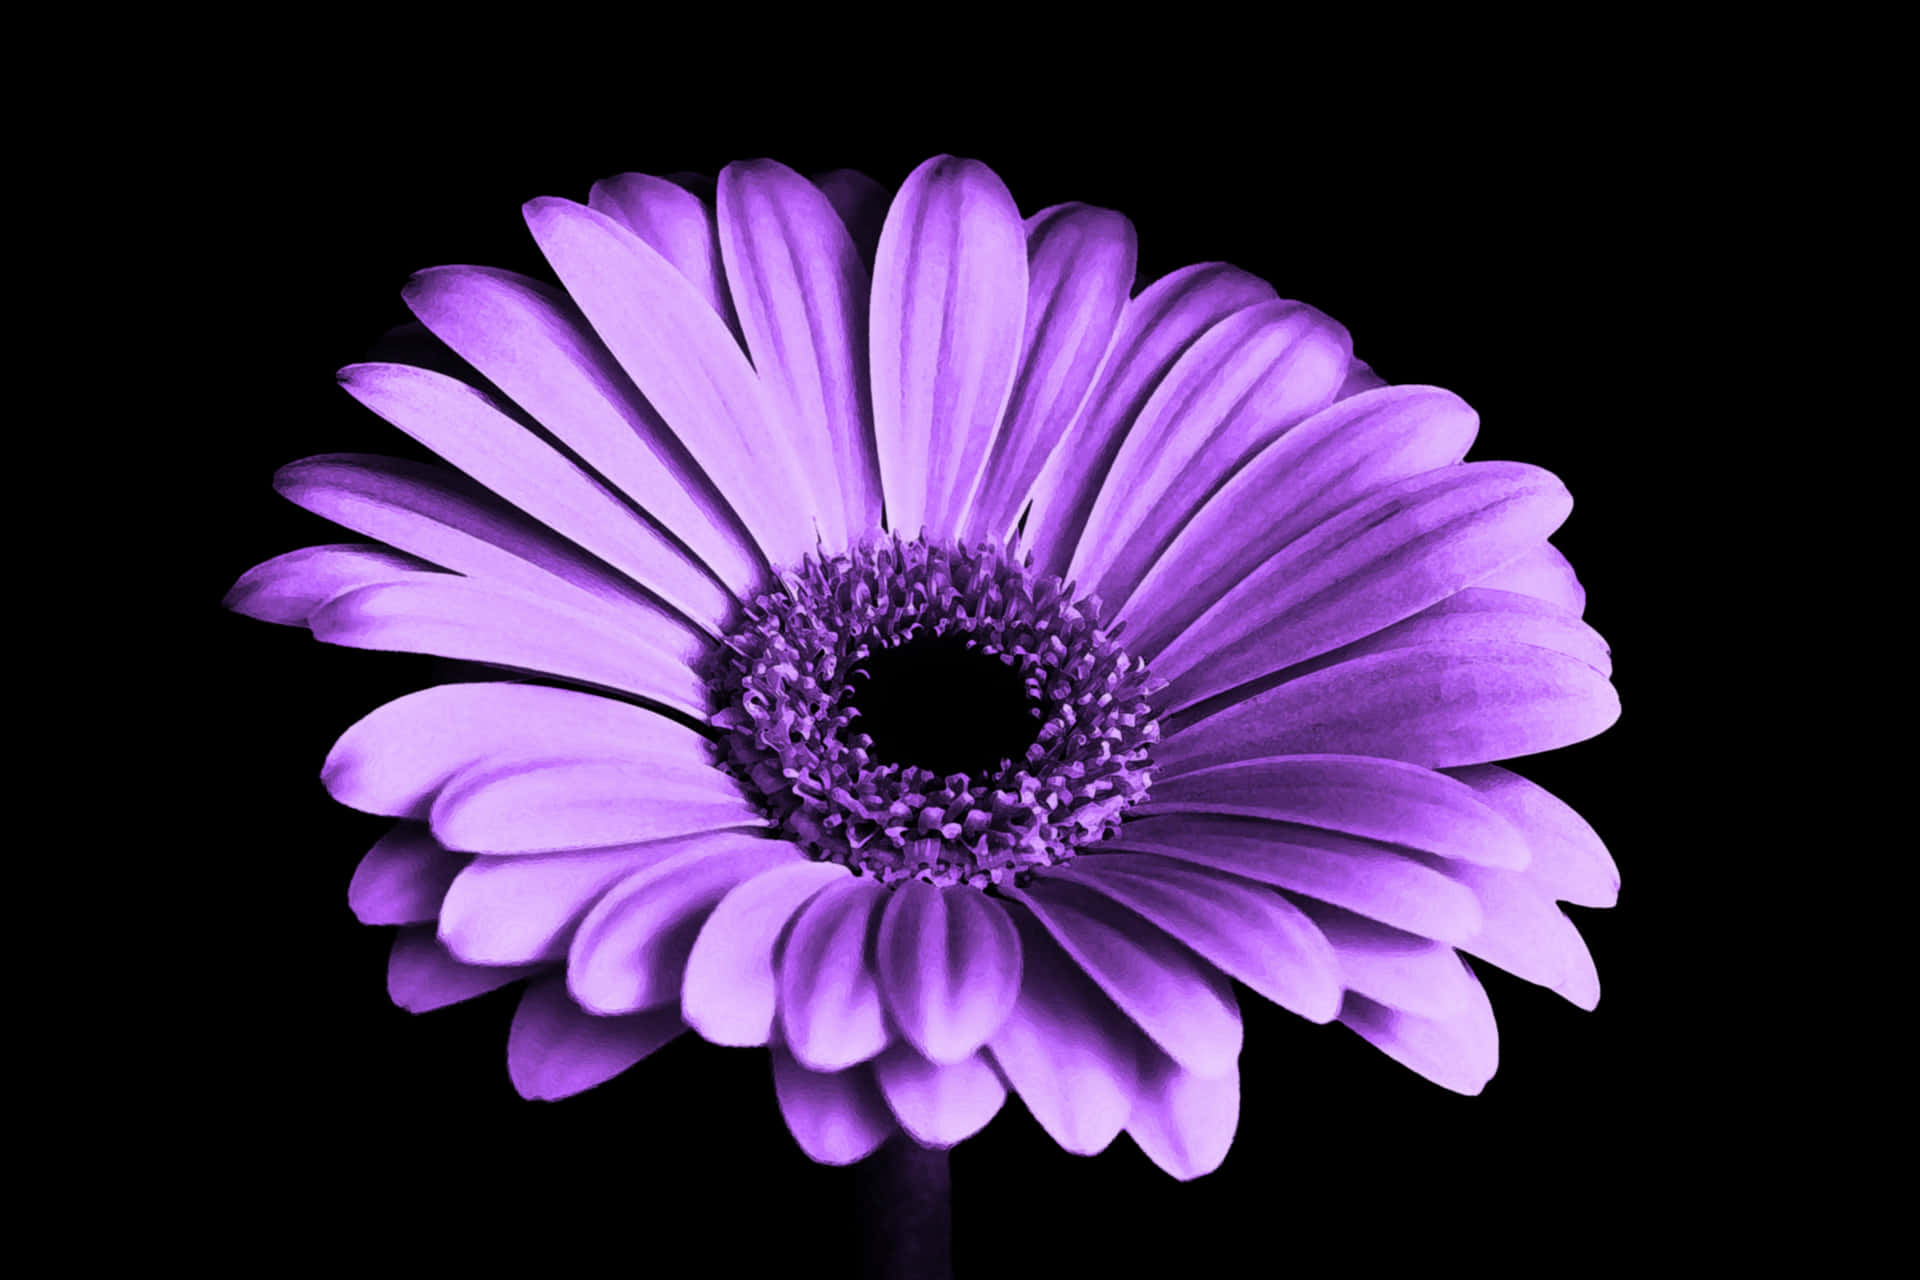 Closeup shot of a beautiful purple flower in full bloom